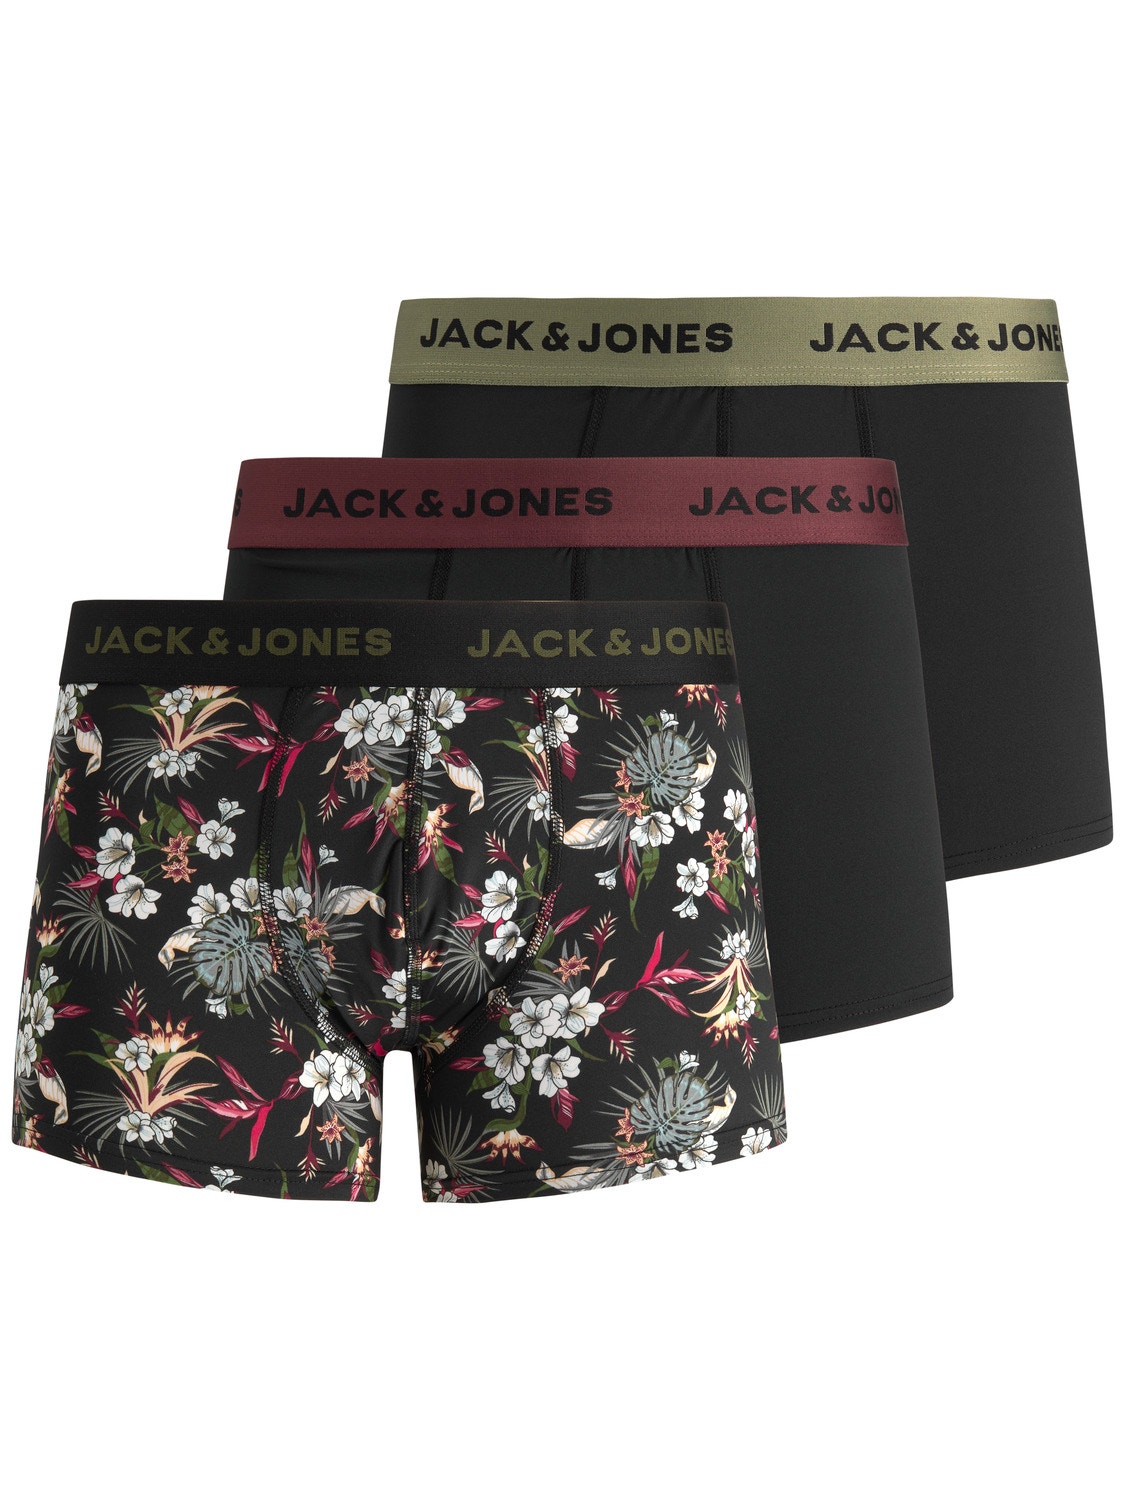 Jack & Jones 3 Trunks -Black - 12194284